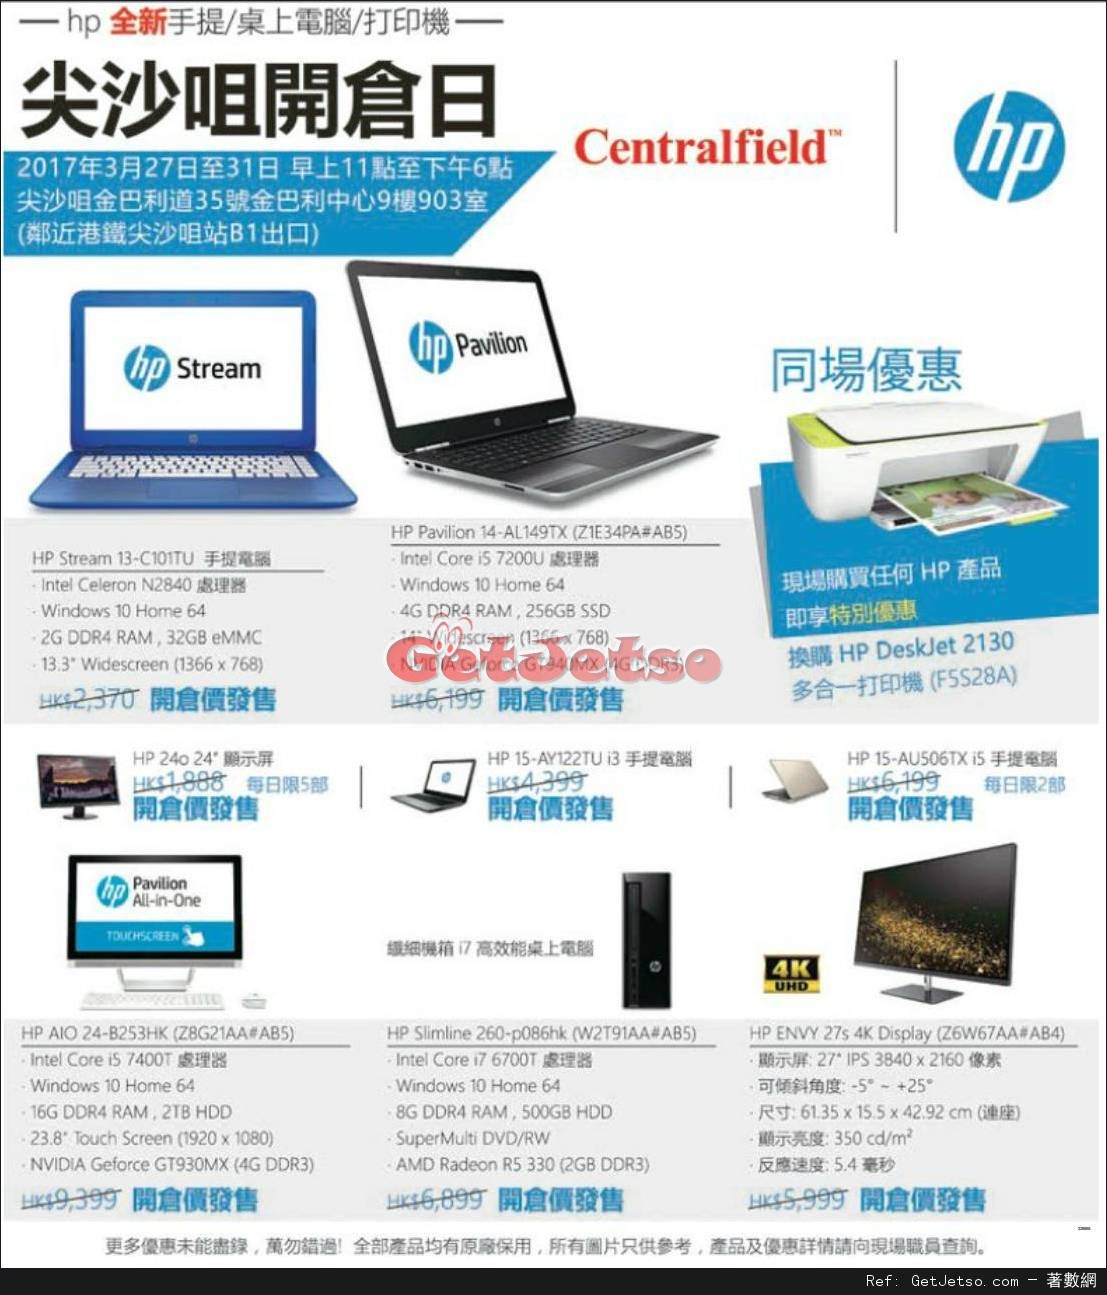 HP手提/桌上電腦、打印機開倉優惠(17年3月27-31日)圖片1